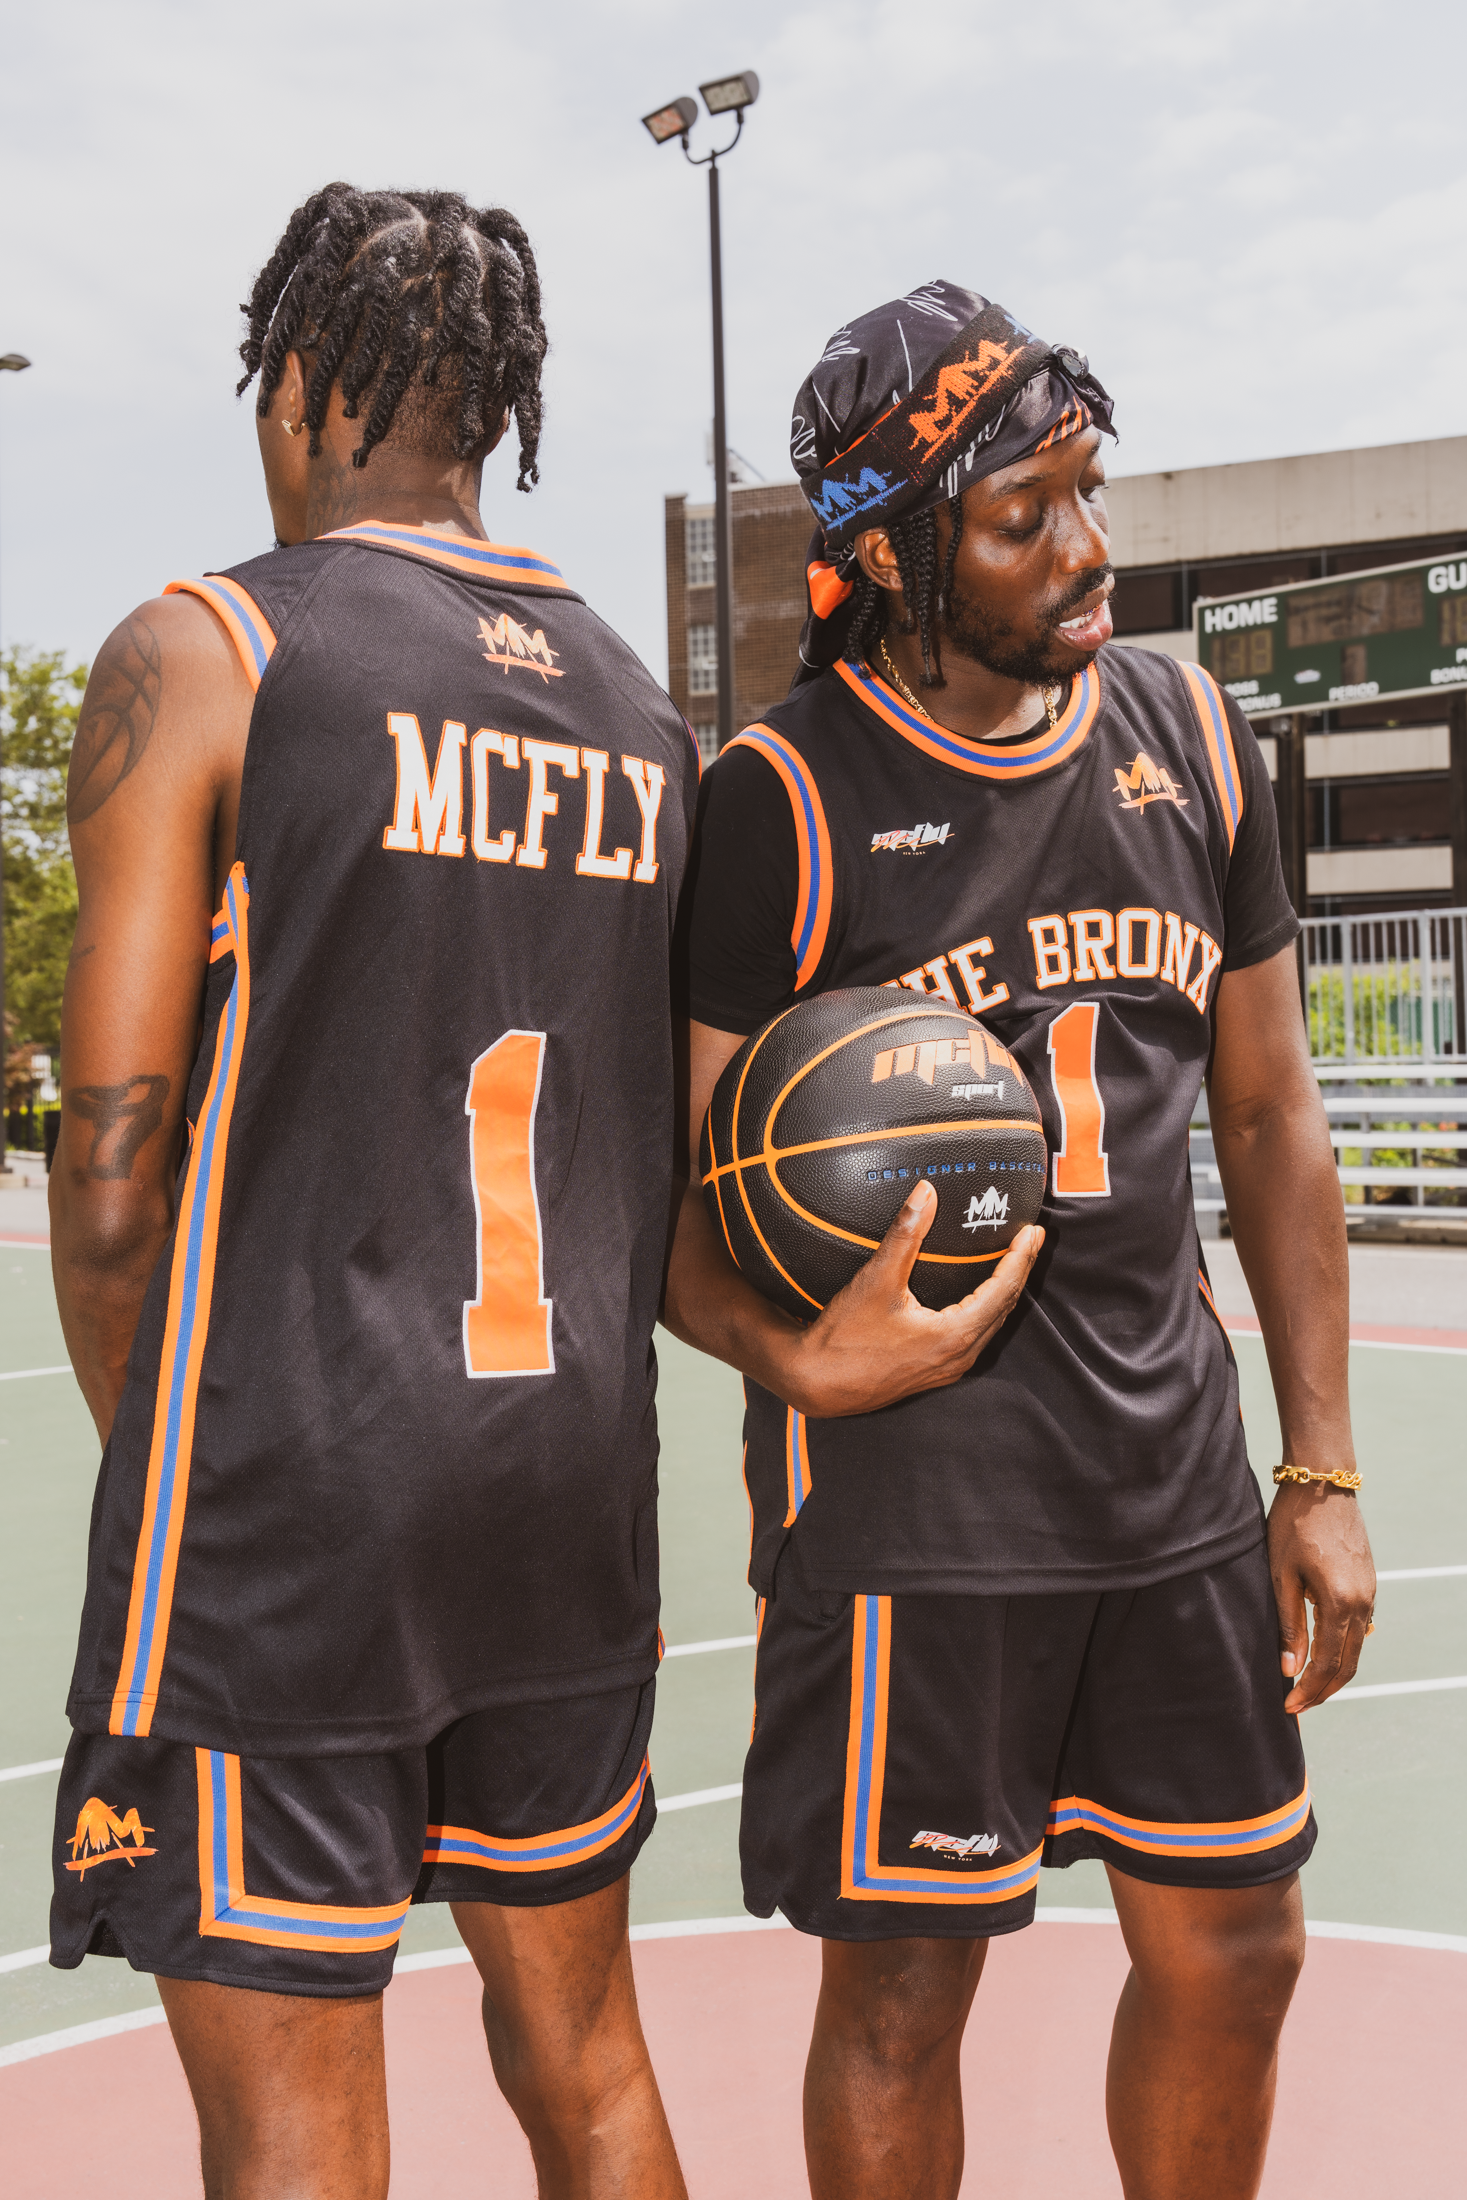 Bronx Knicks Jersey